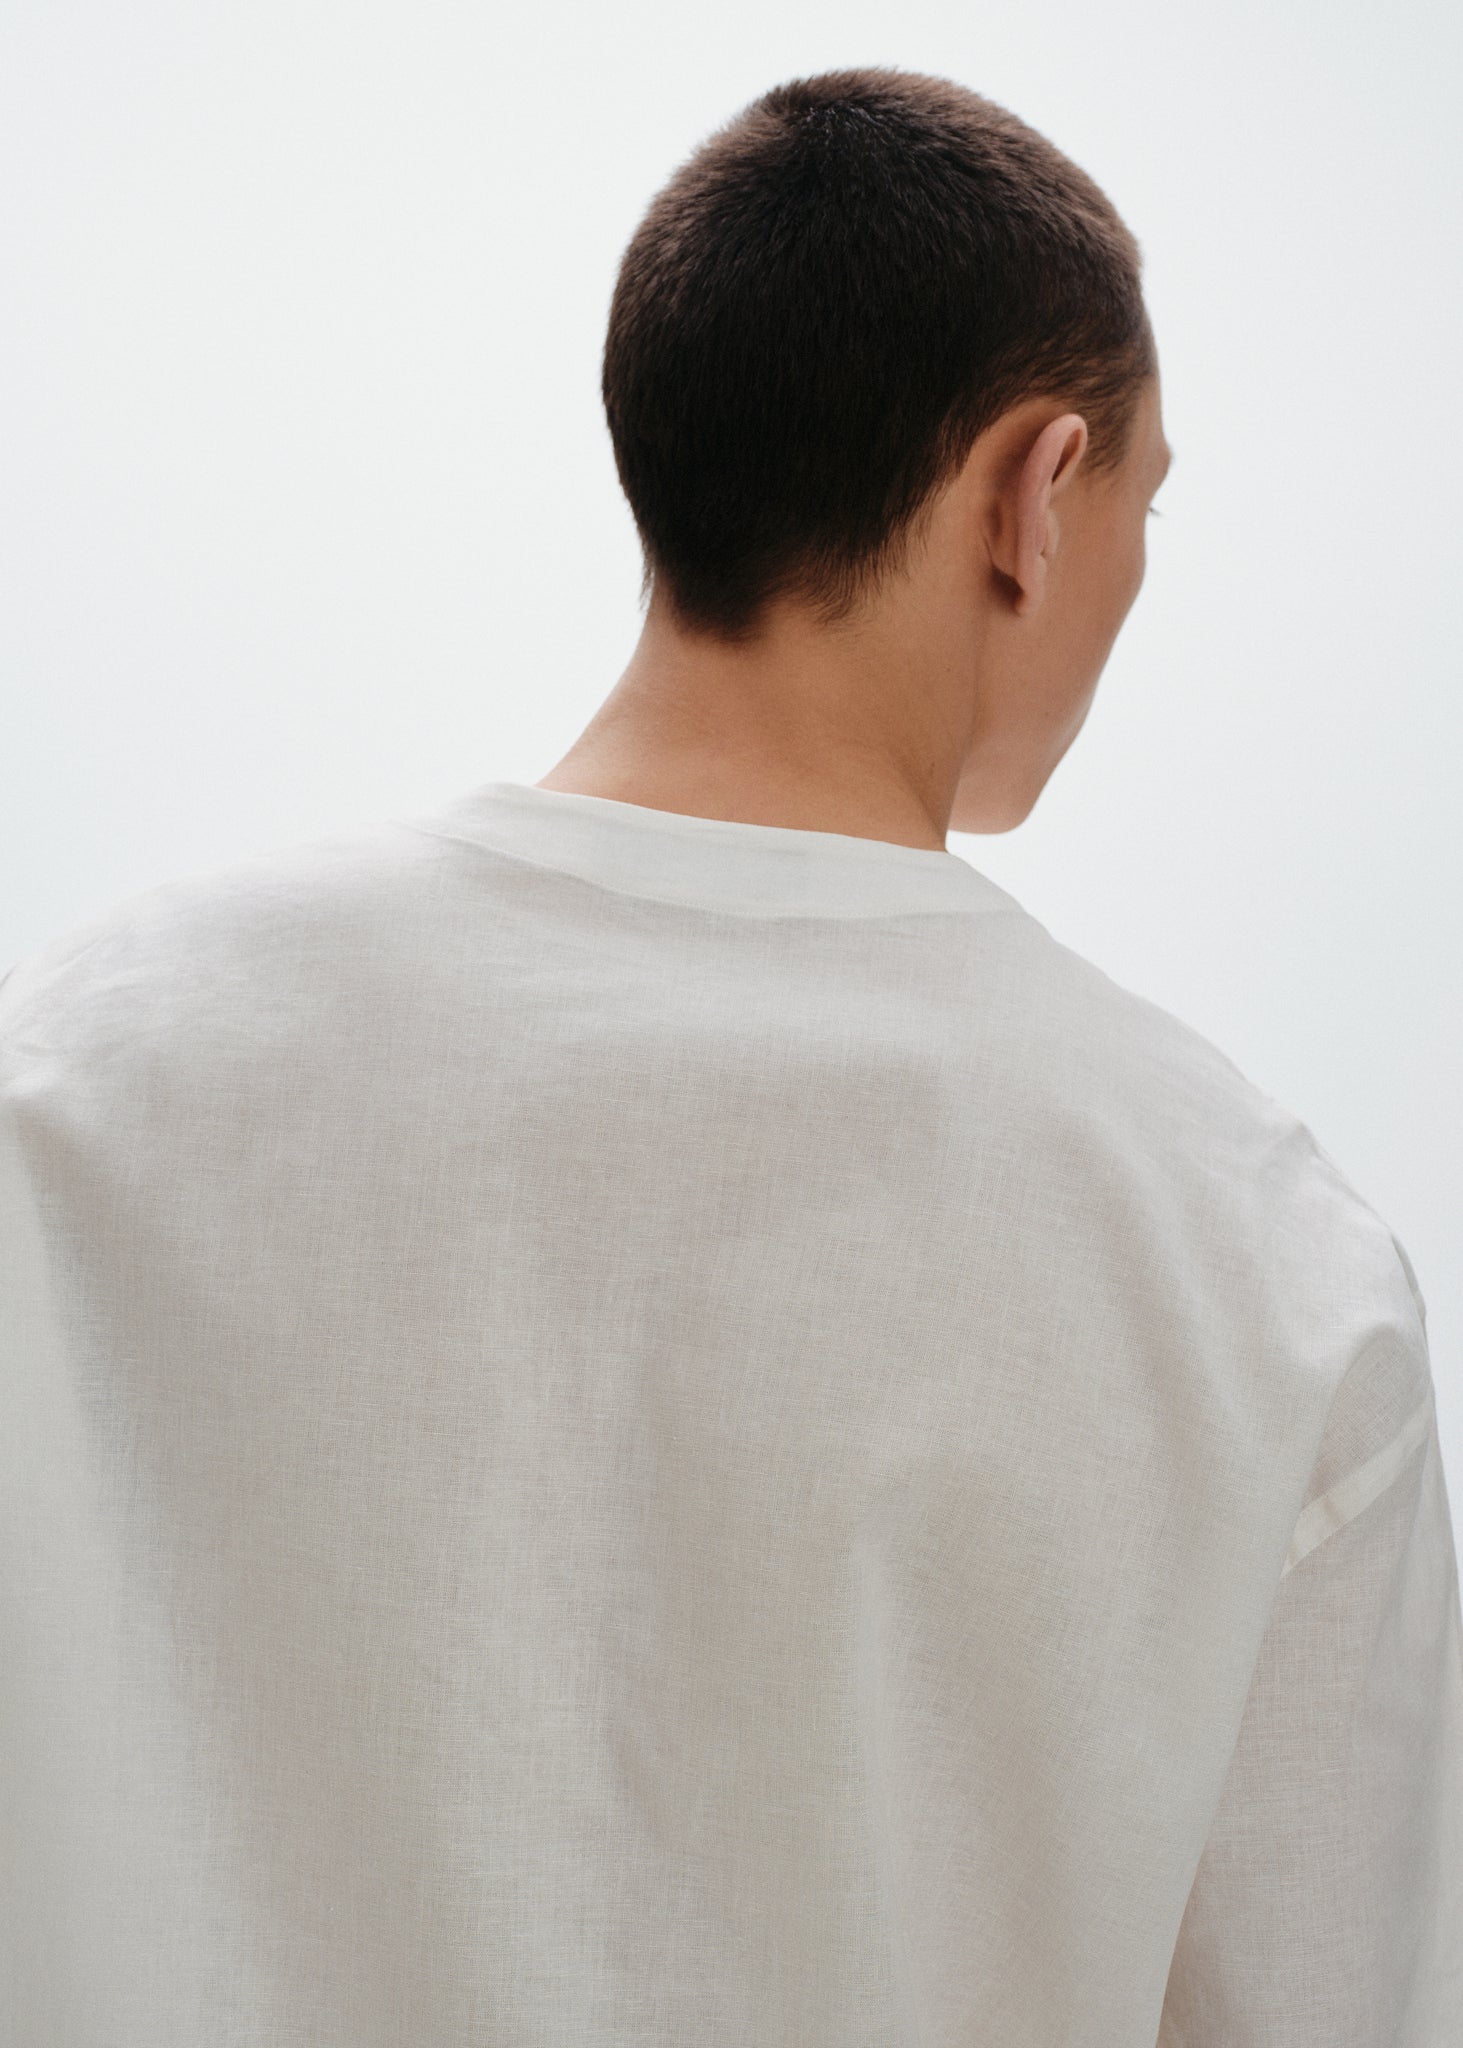 White linen cotton short sleeve t-shirt